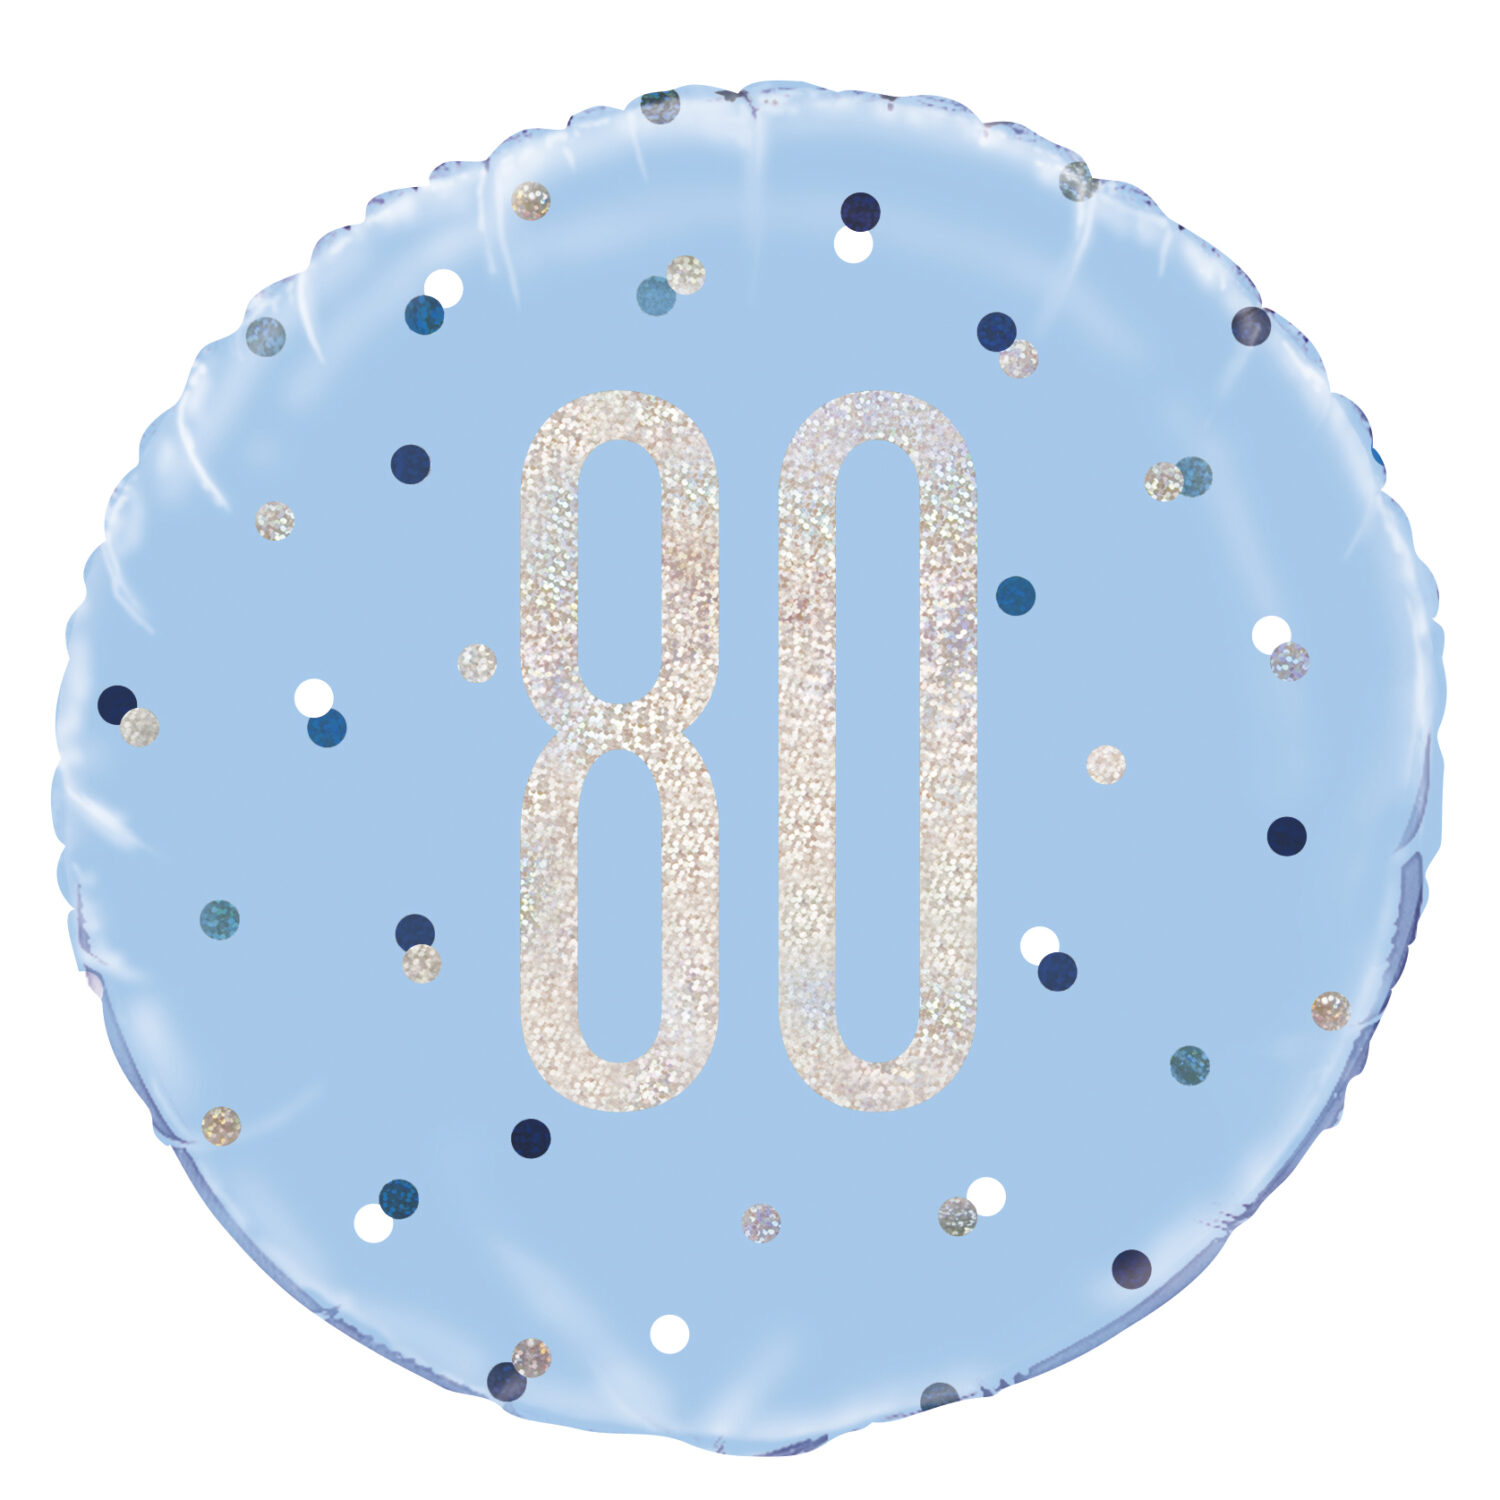 80th birthday balloon